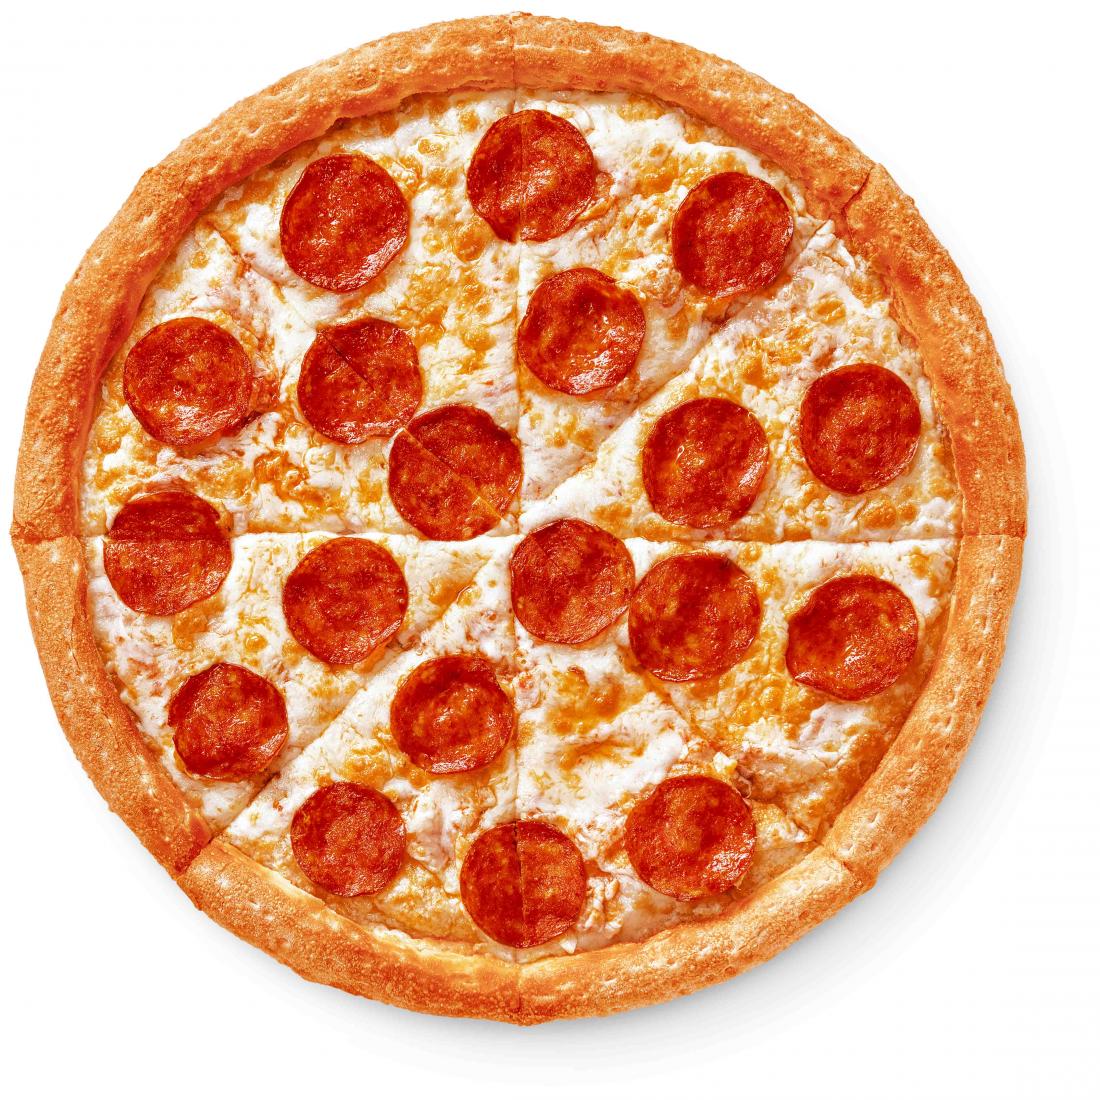 что входит в состав пицца пепперони фото 65